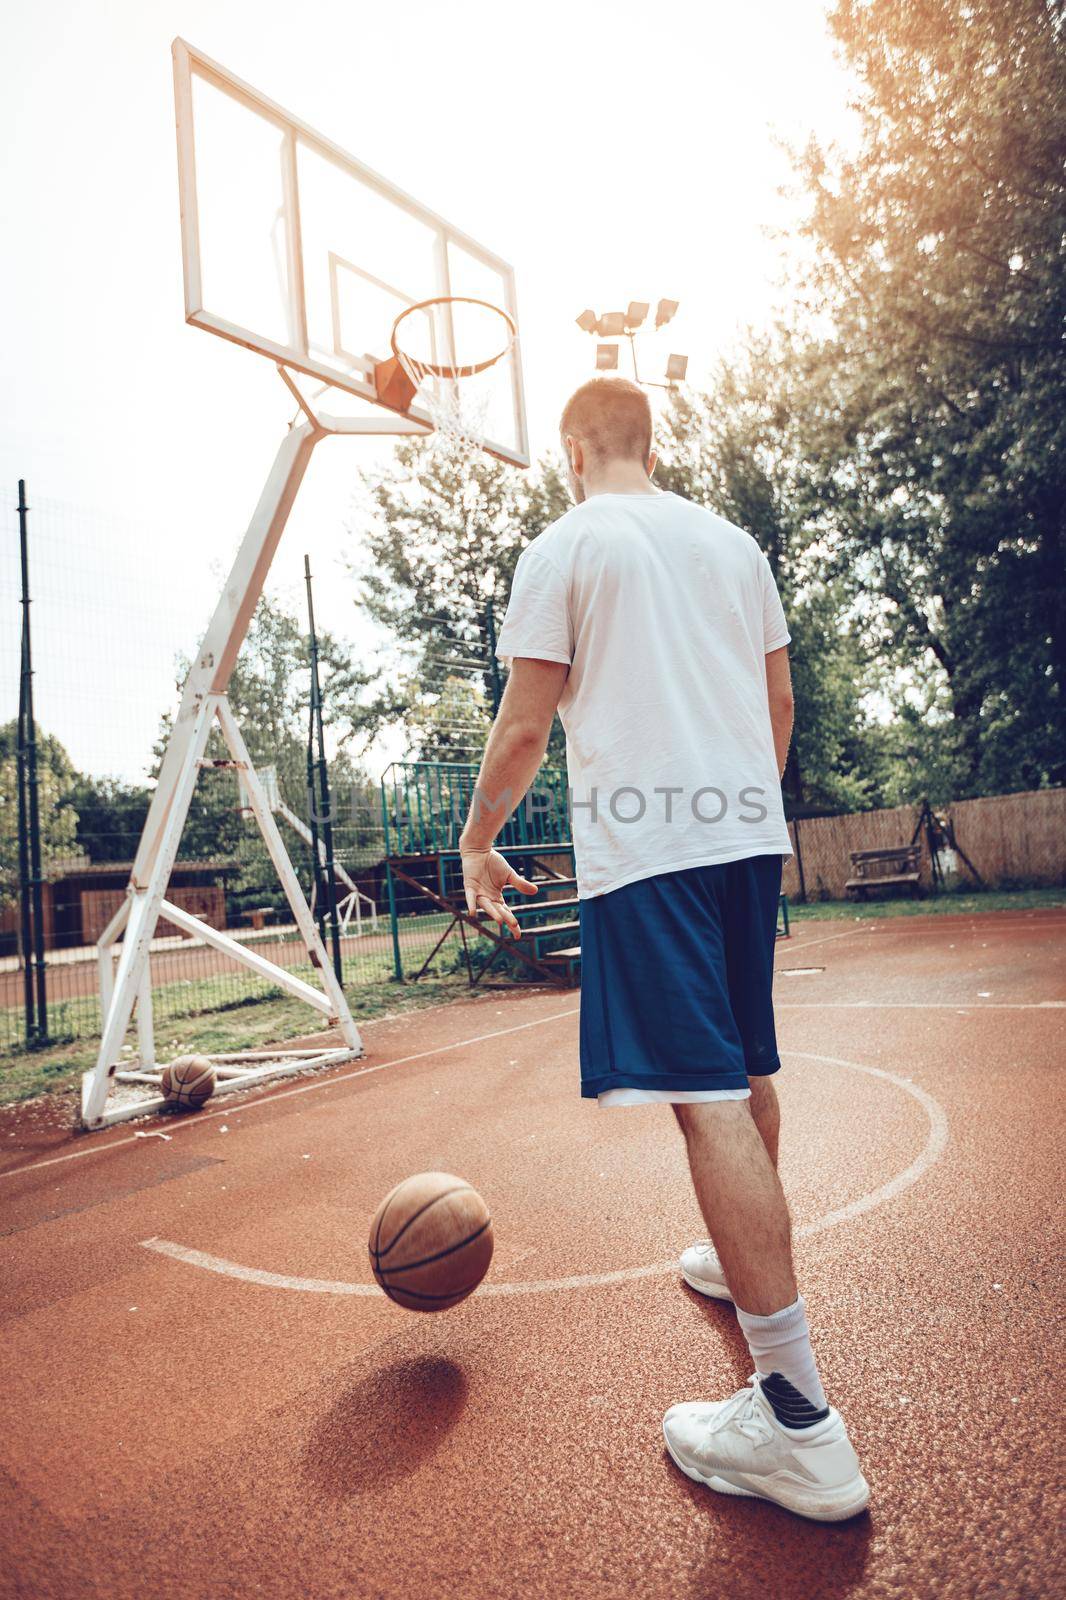 Street Basketball Payer by MilanMarkovic78